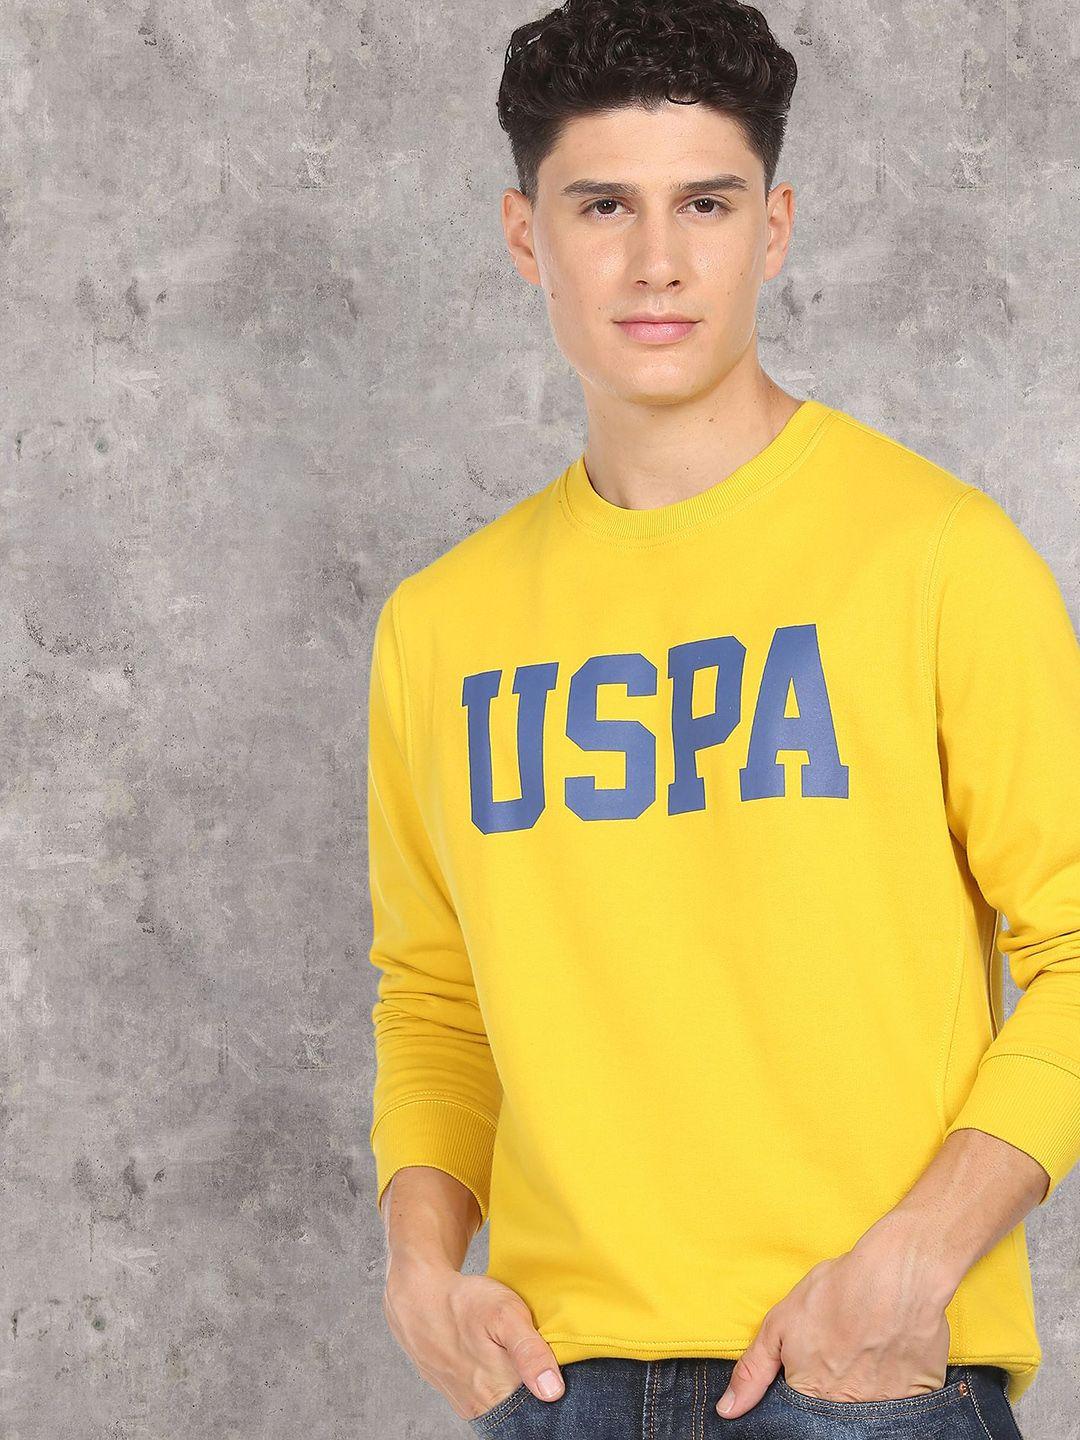 u-s-polo-assn-denim-co-men-yellow-printed-cotton-sweatshirt